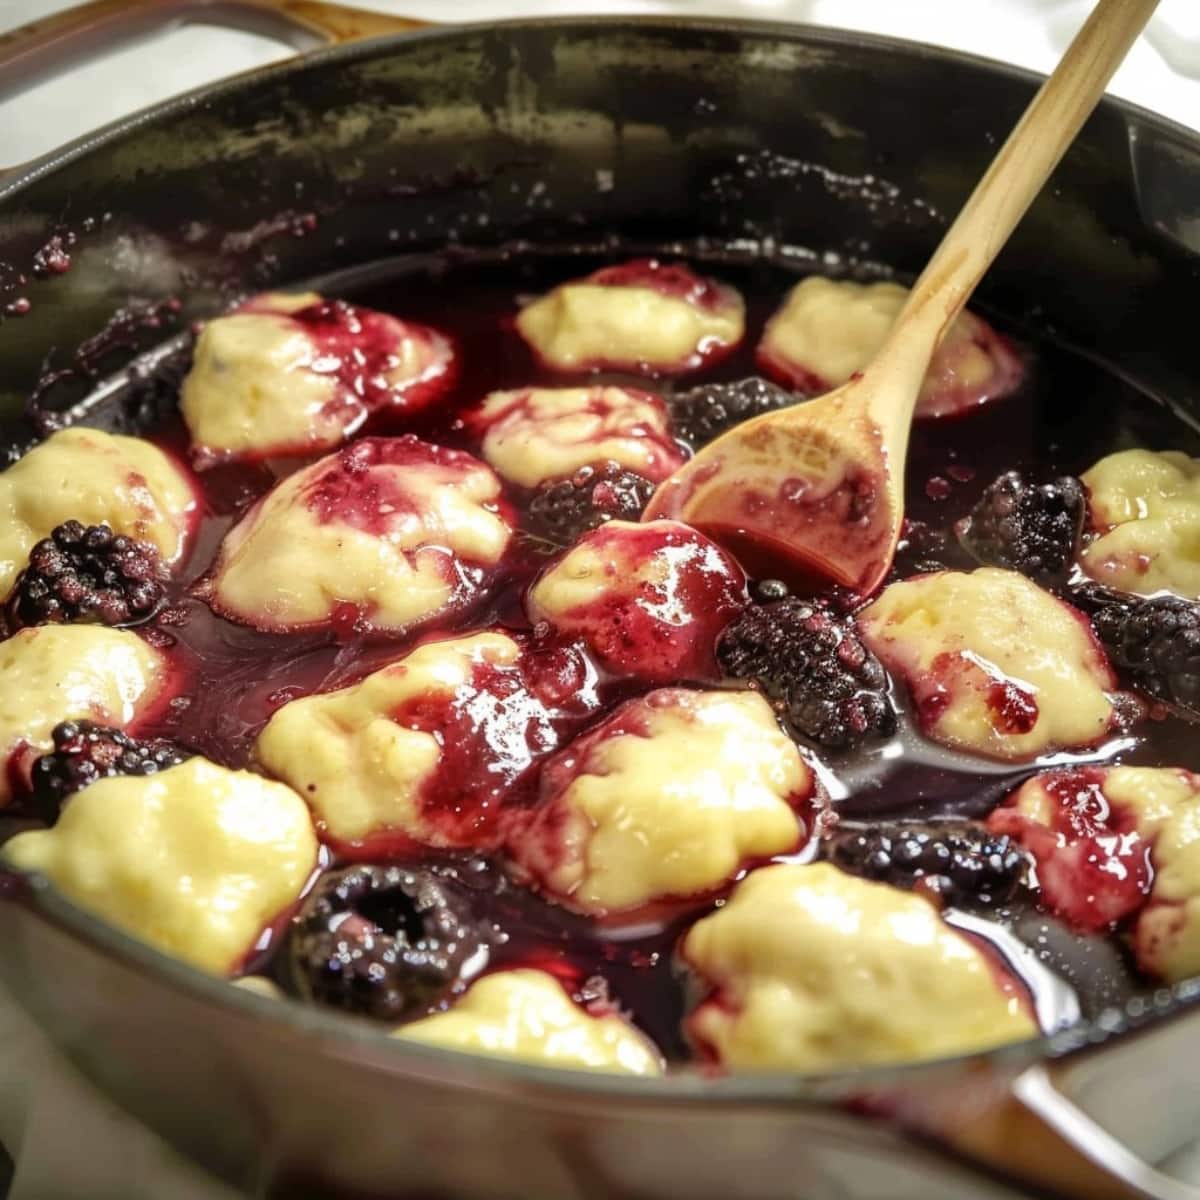 Blackberry dumplings cooked in a Dutch oven pot.